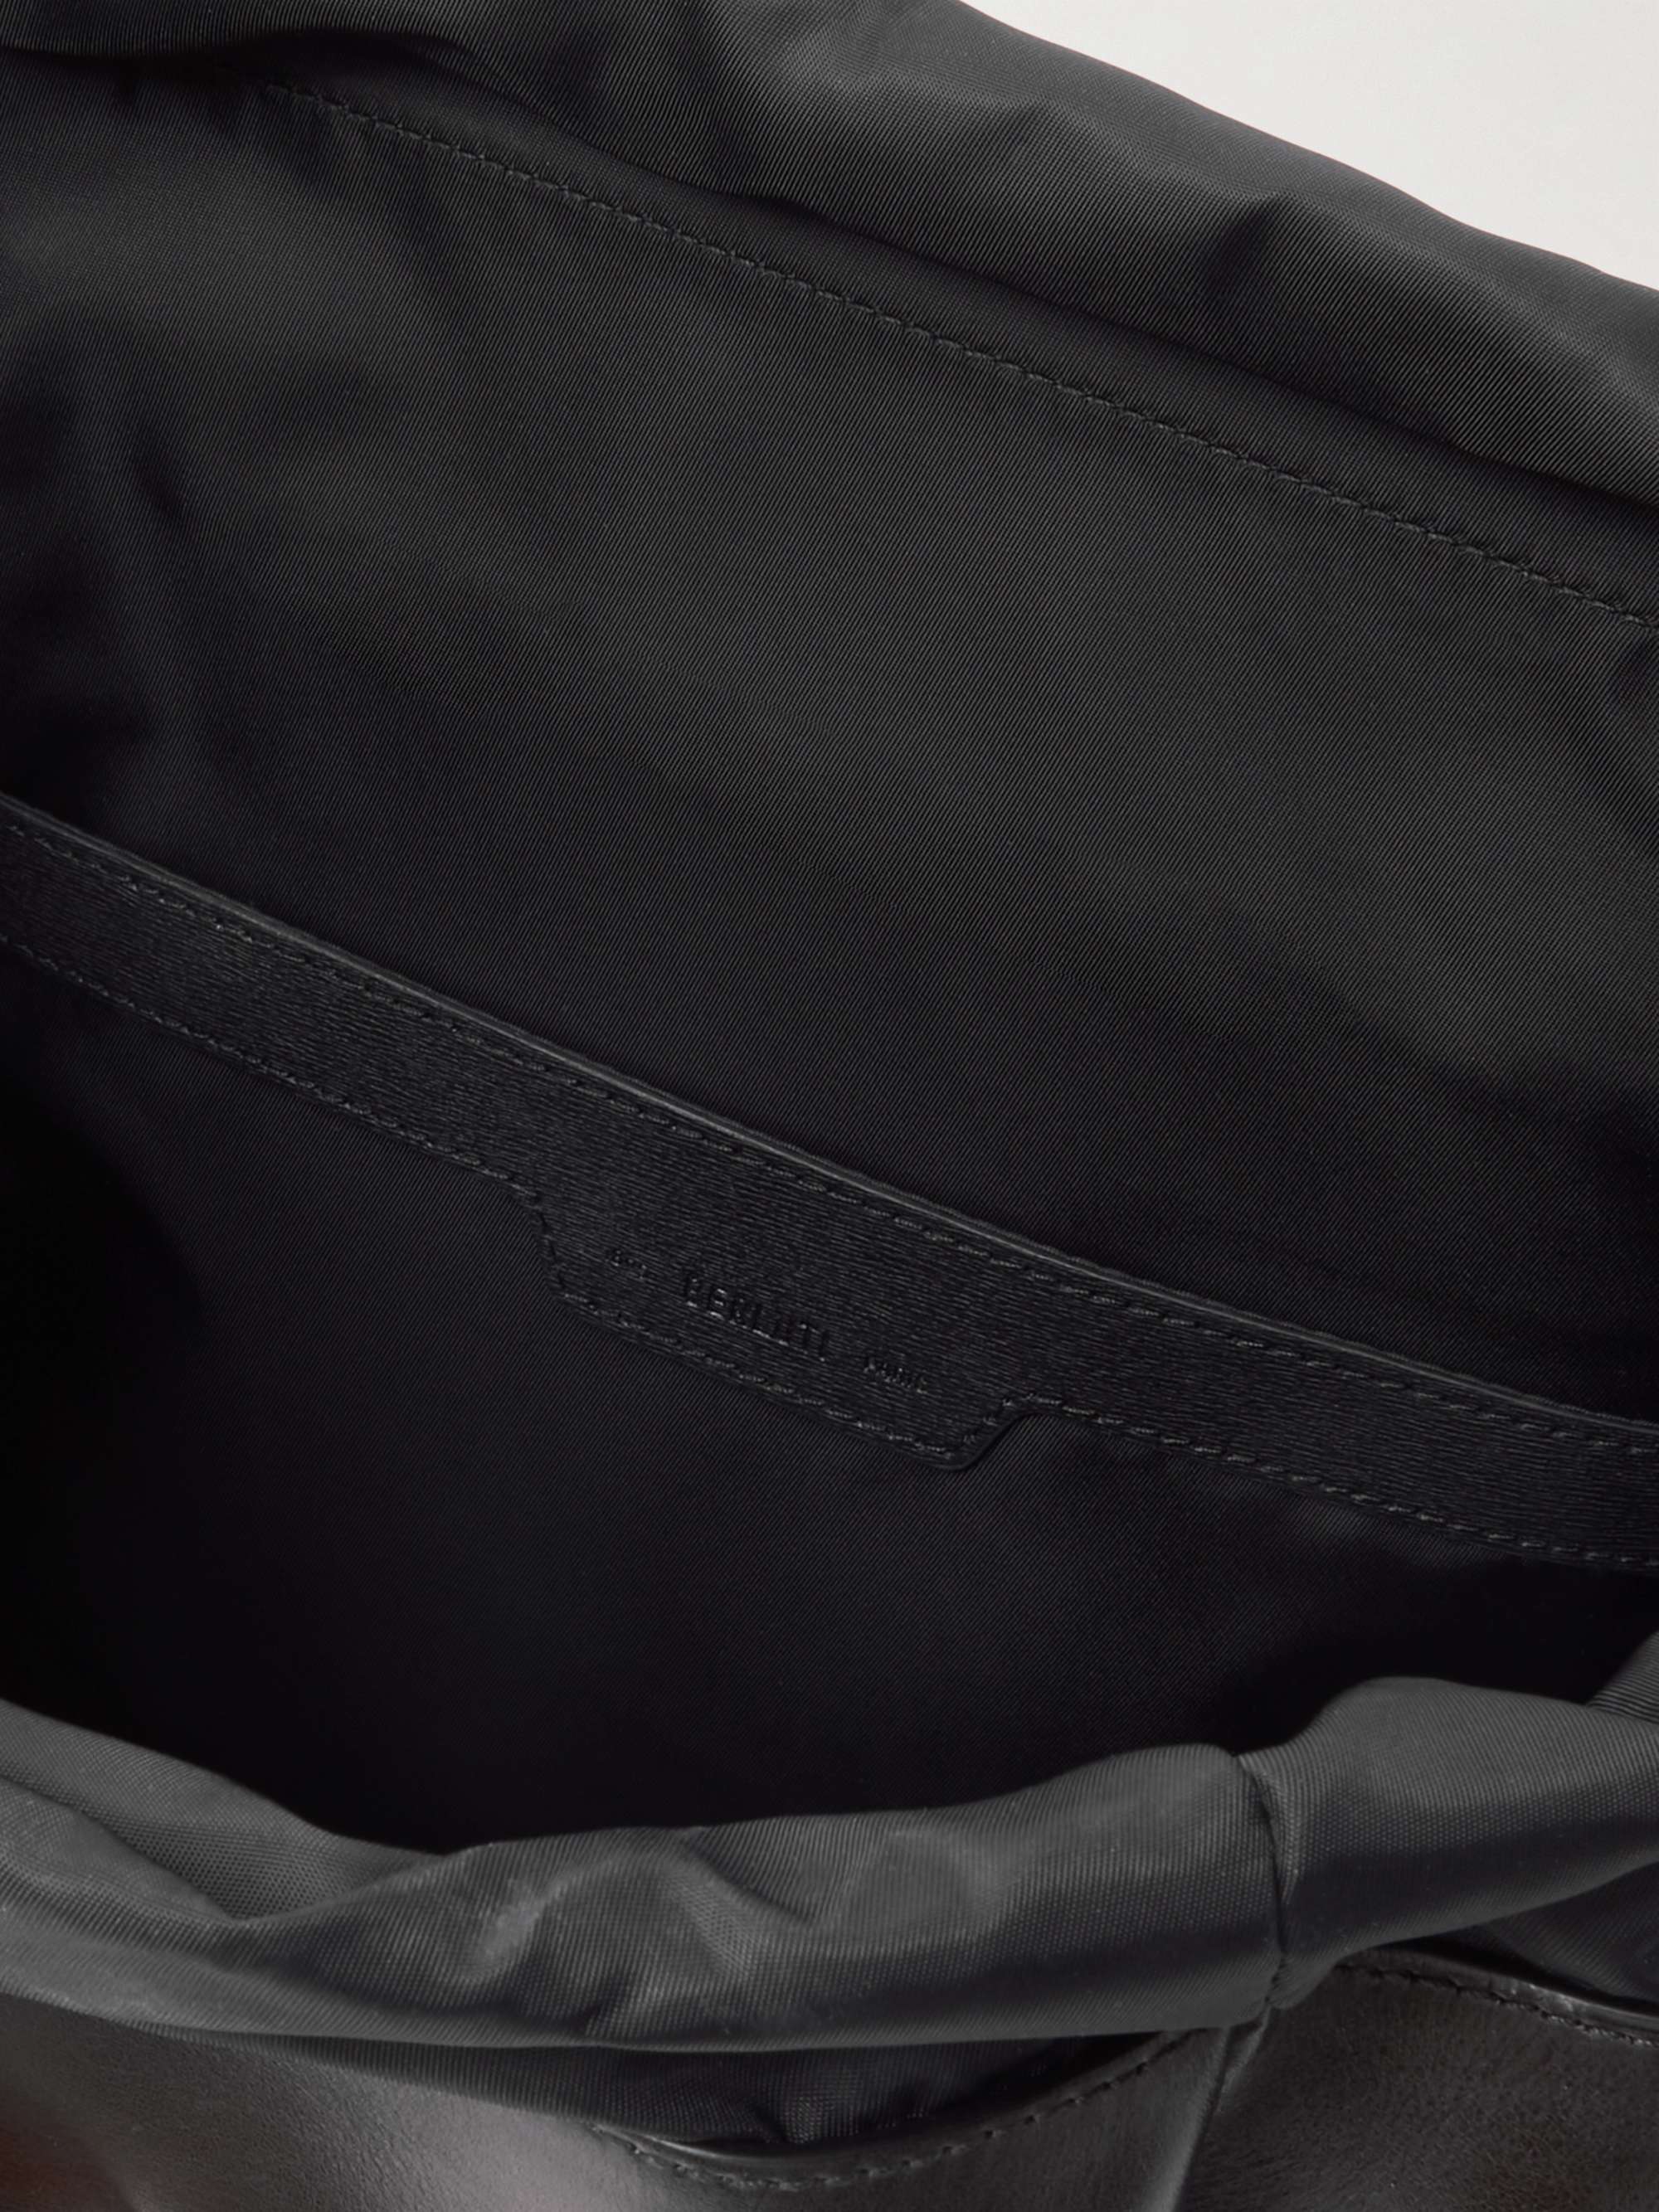 BERLUTI Scritto Leather Backpack